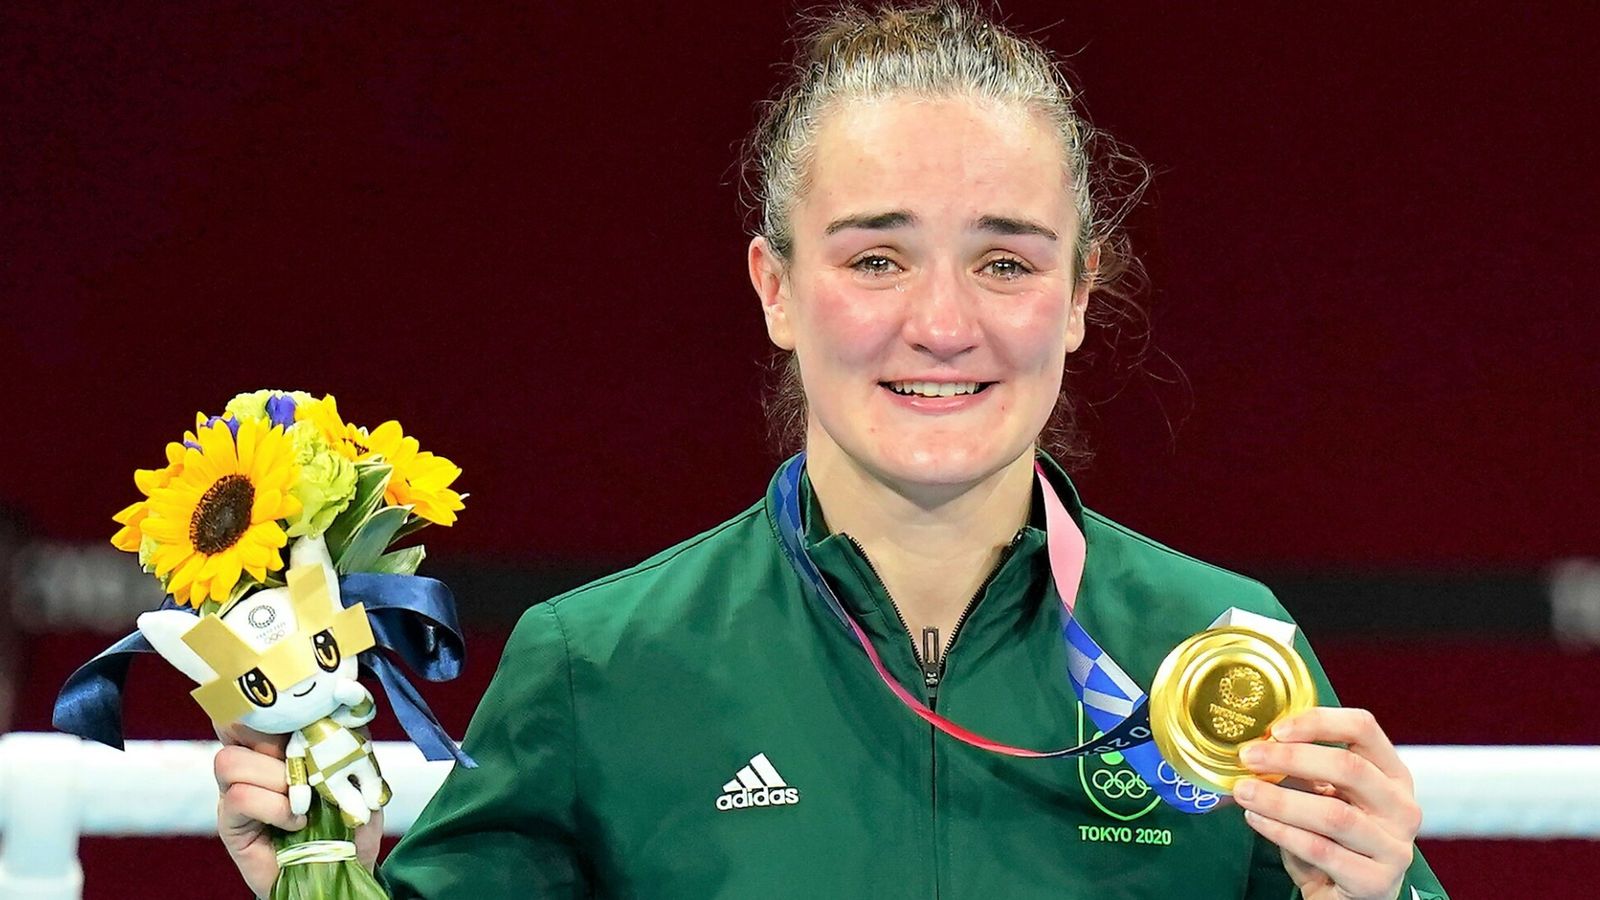 Kelly Harrington won the Olympic gold medal for Ireland, beating Beatrice Ferreira do Brazil, imitating Katie Taylor.

